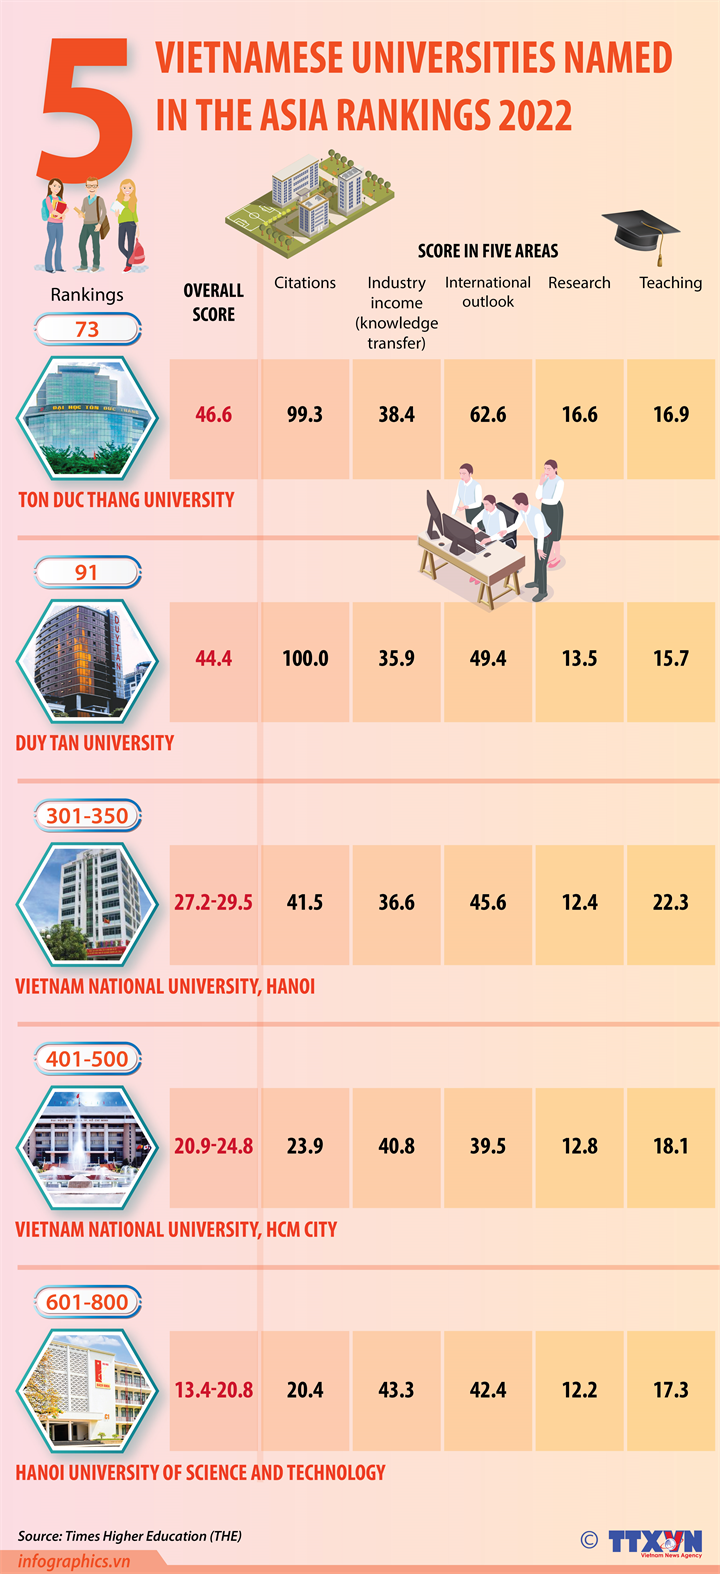 Five Vietnamese universities named in THE Asia Rankings 2022